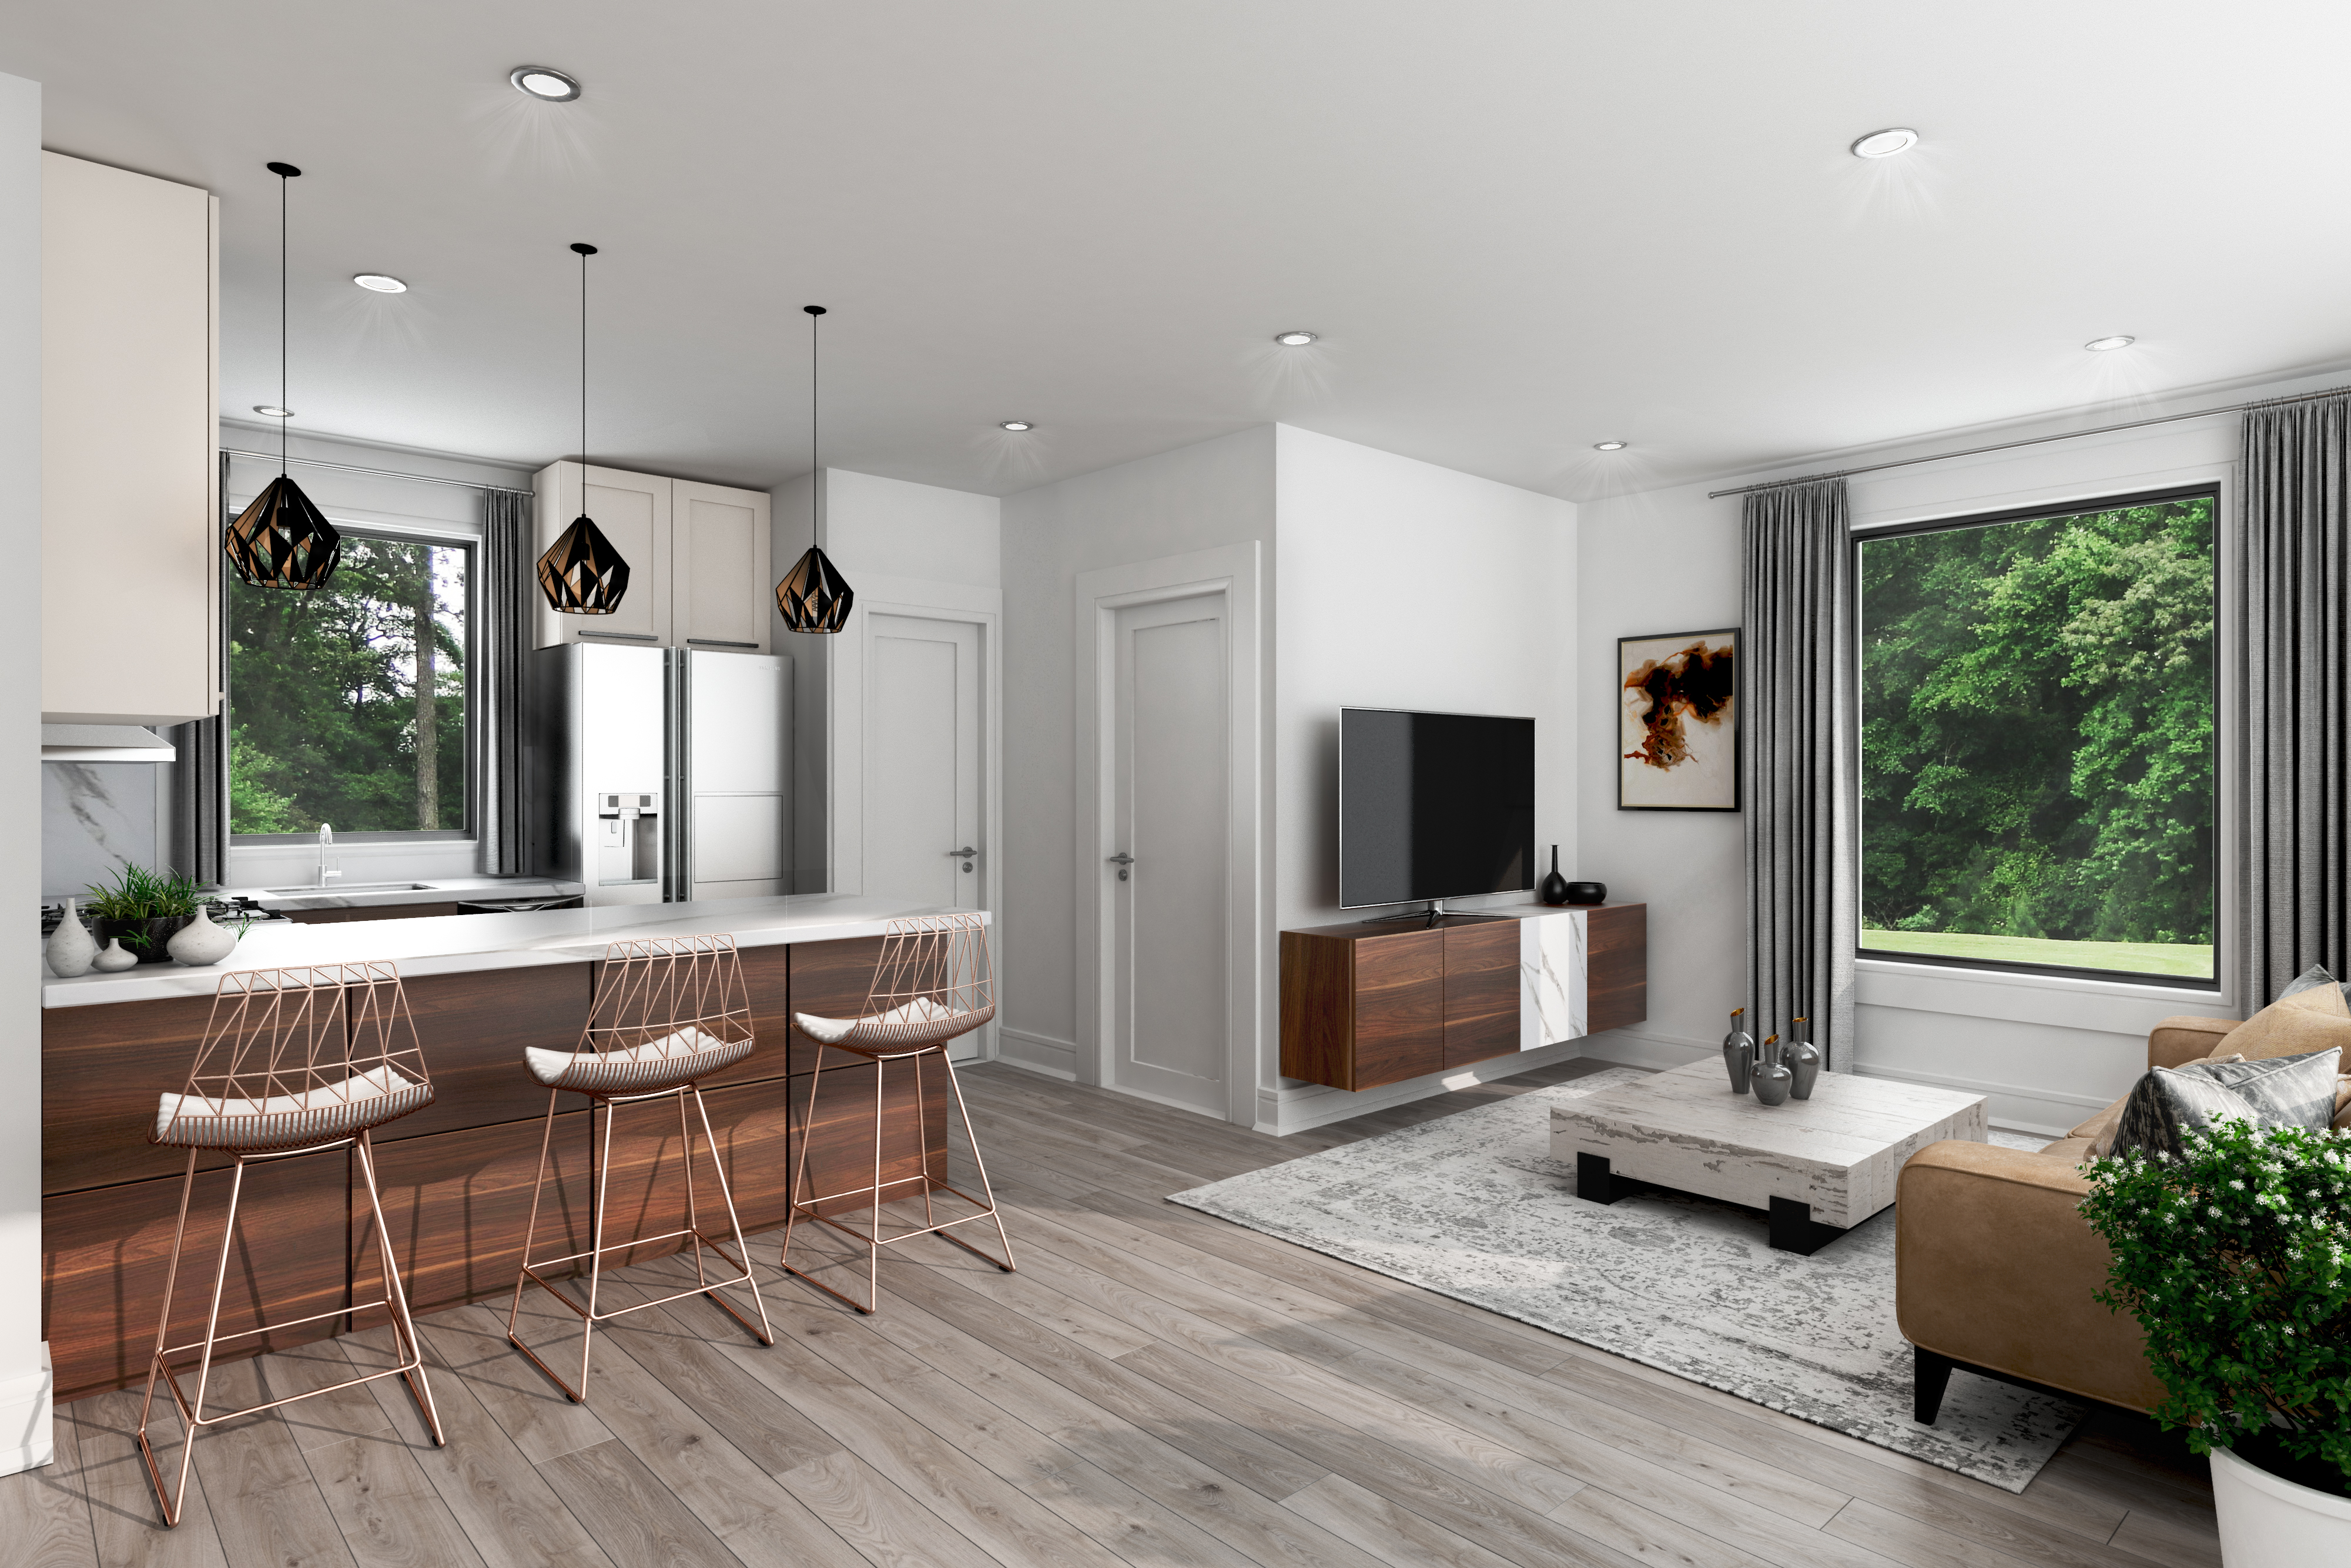 Guest House Concept - Chicago Interior Designer, Jordan Guide